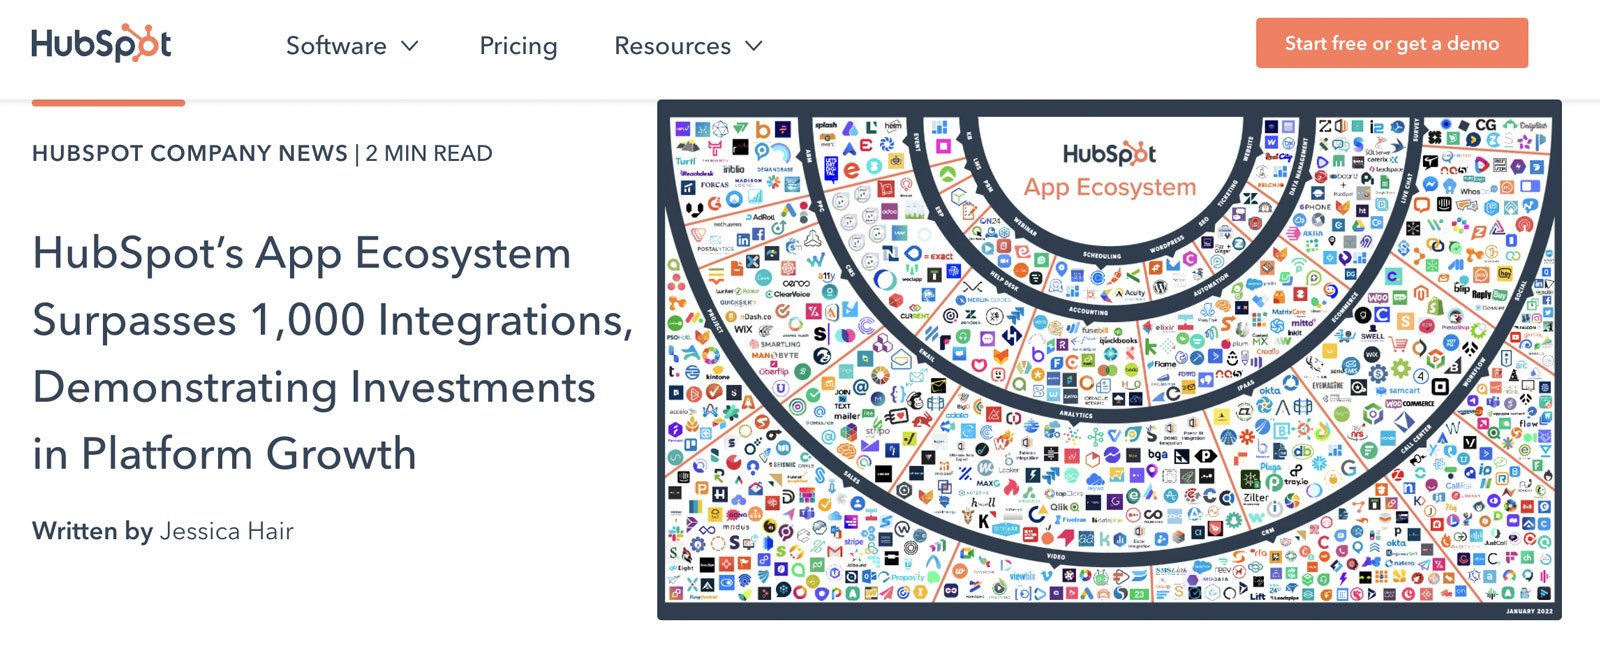 HubSpot’s-App-Ecosystem-Surpasses-1,000-Integrations,-Demonstrating-Investments-in-Platform-Growth